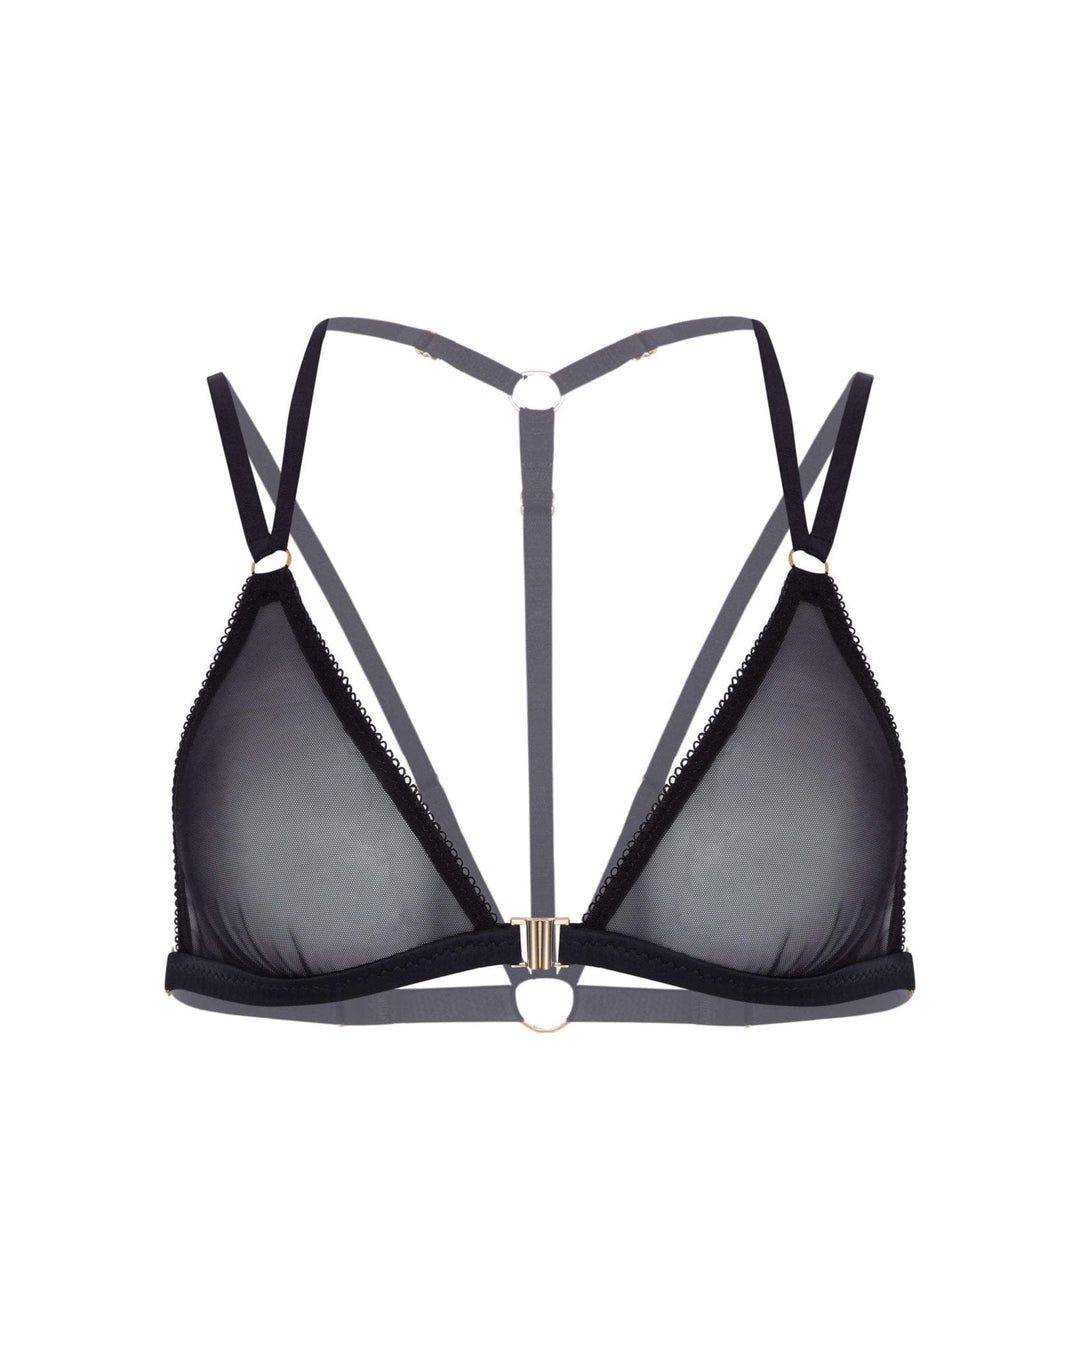 Vivi Leigh London lingerie Black Mesh Triangle Bralette sexy harness luxury lingerie Black Luxury Sexy Triangle Bralette uk sustainable brand